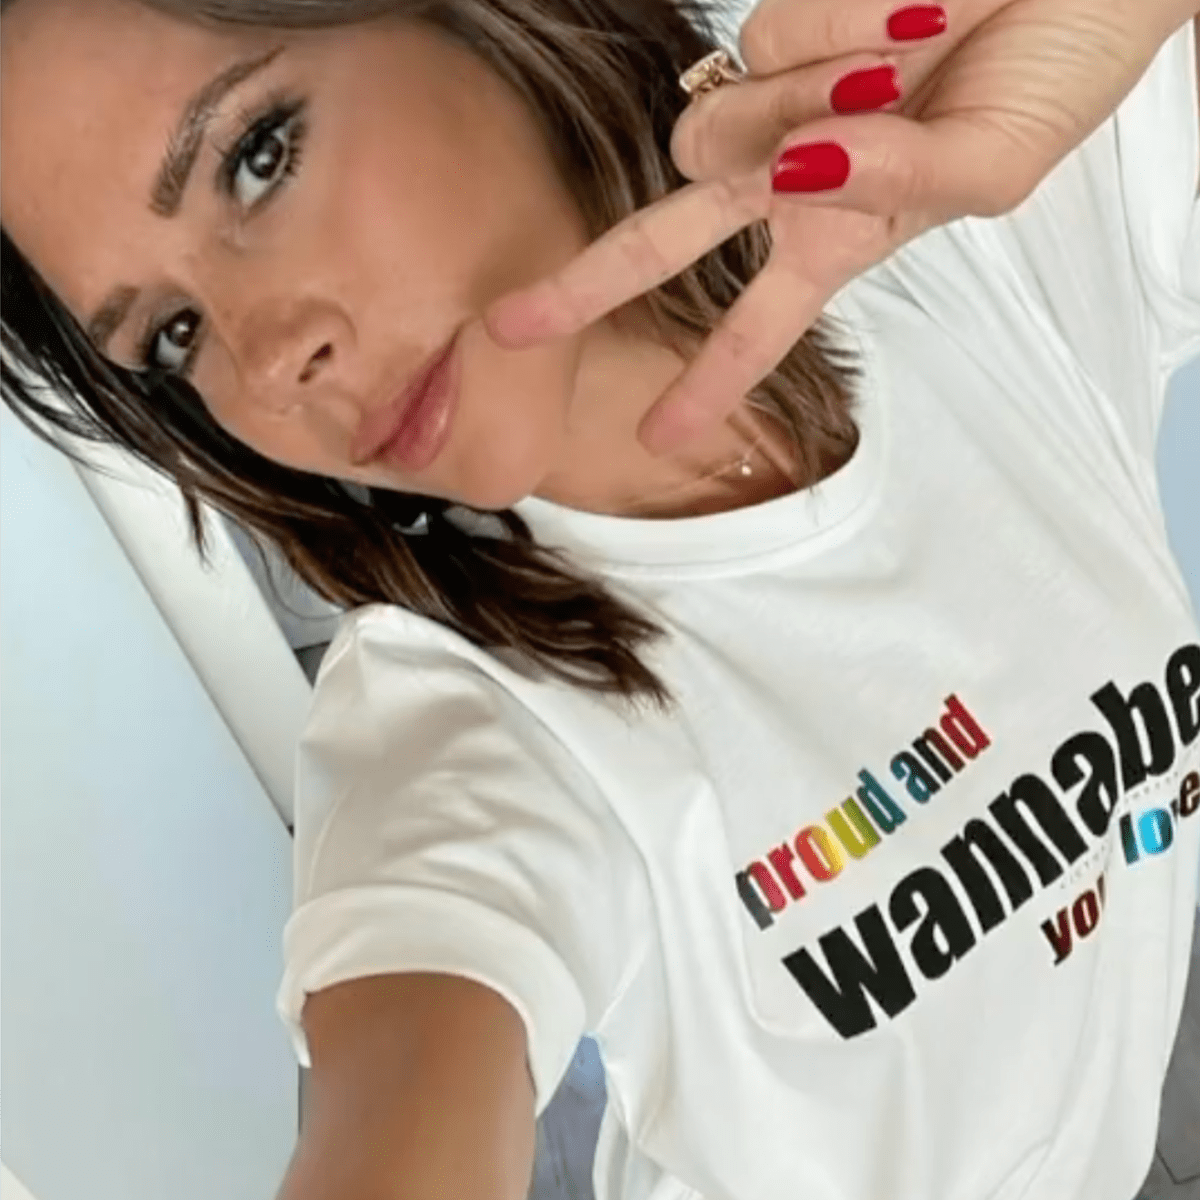 Victoria Beckham's Pride collection